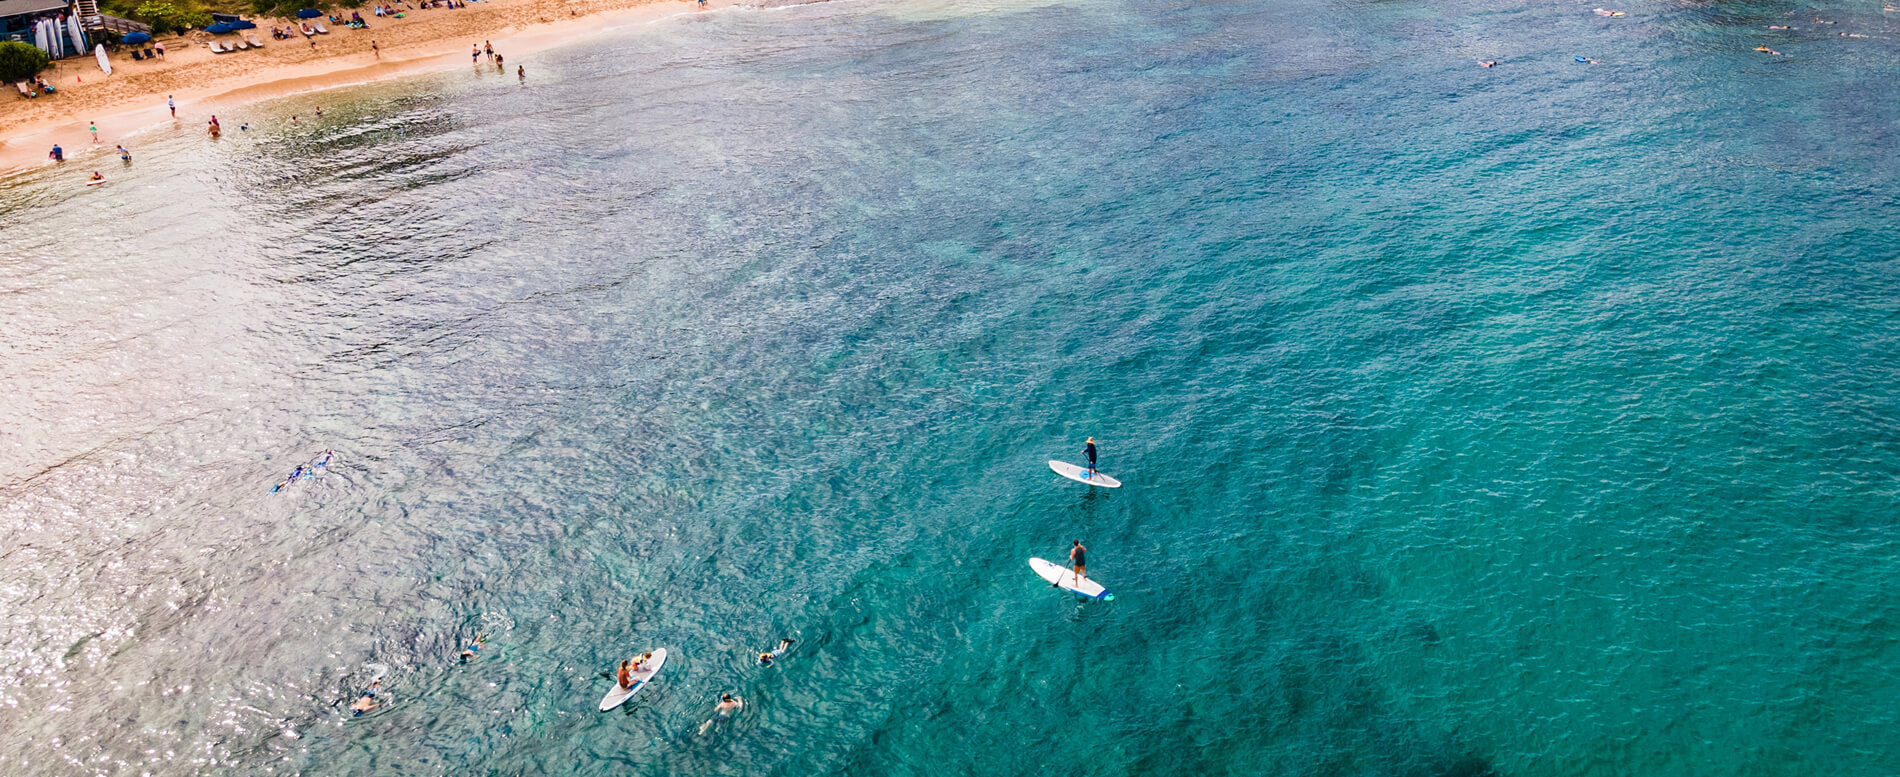 Paddle boarders in Maui, Hawaii